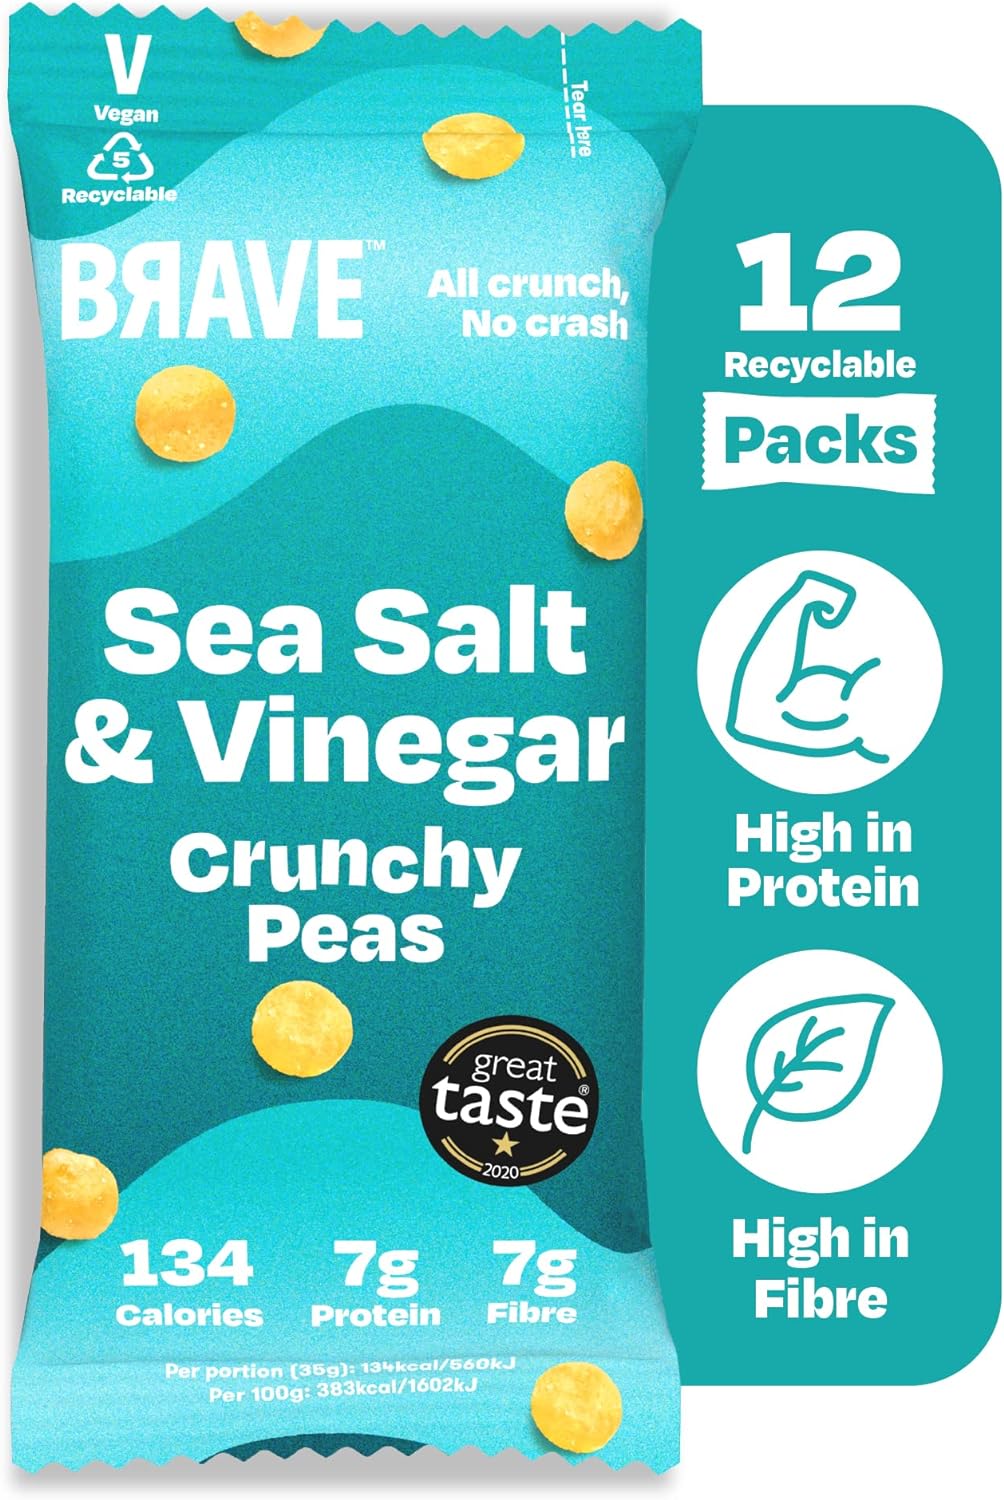 BRAVE Crunchy Peas: Sea Salt and Vinegar Review